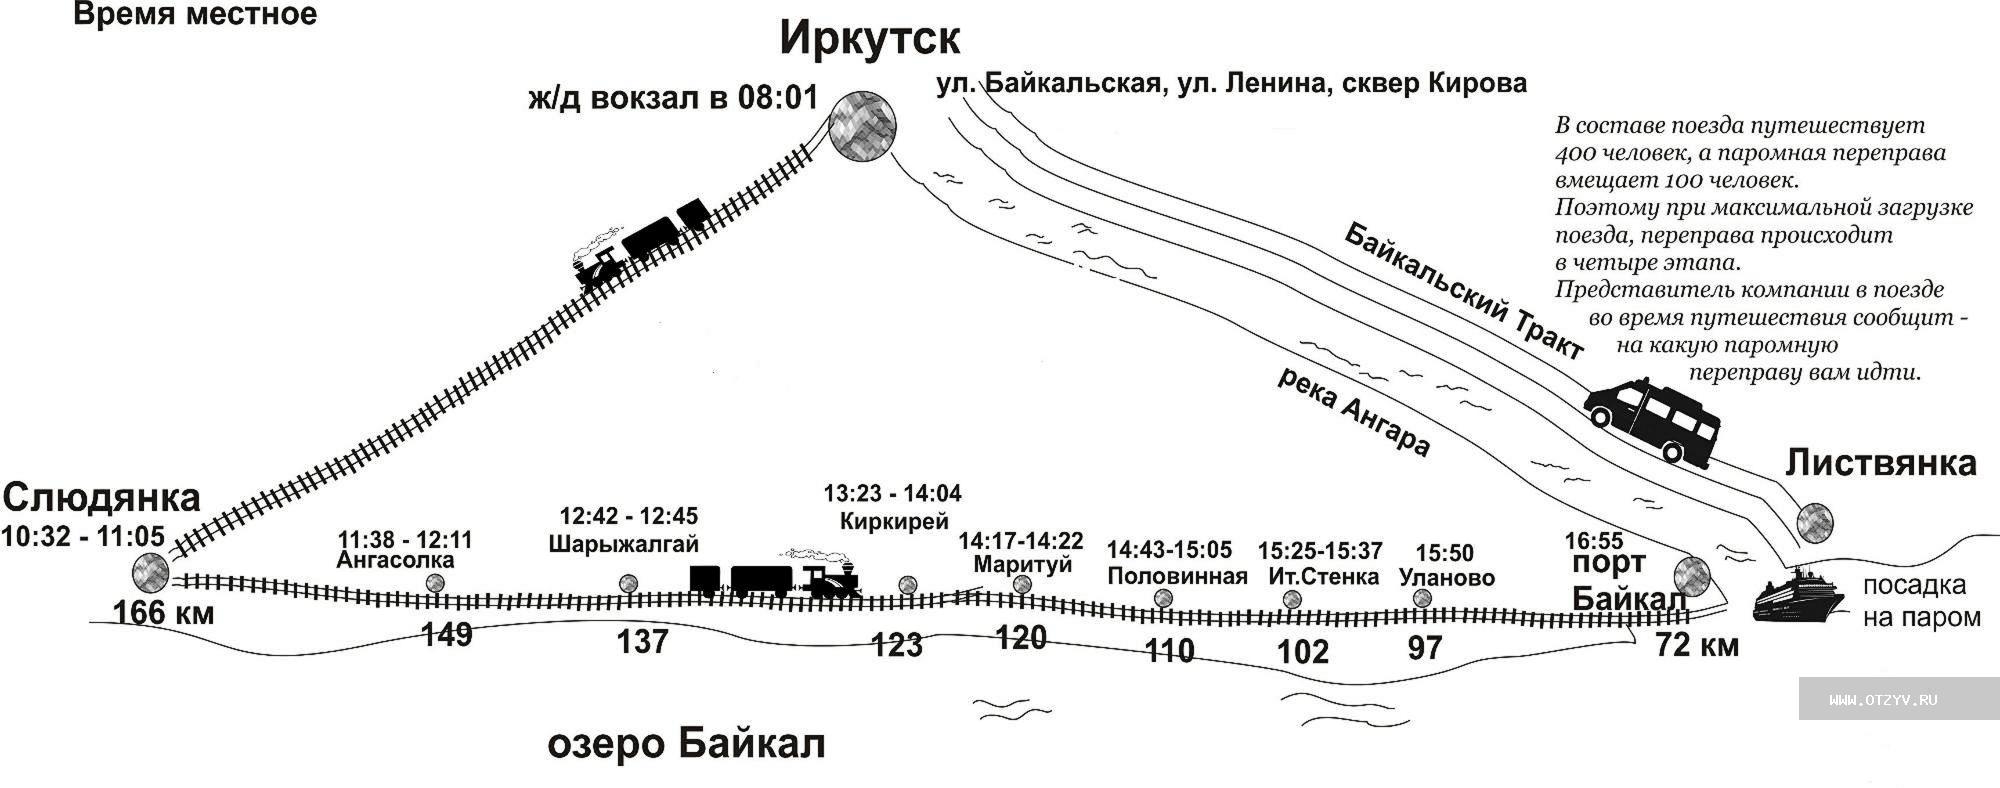 Кругобайкальская железная дорога экскурсия маршрут